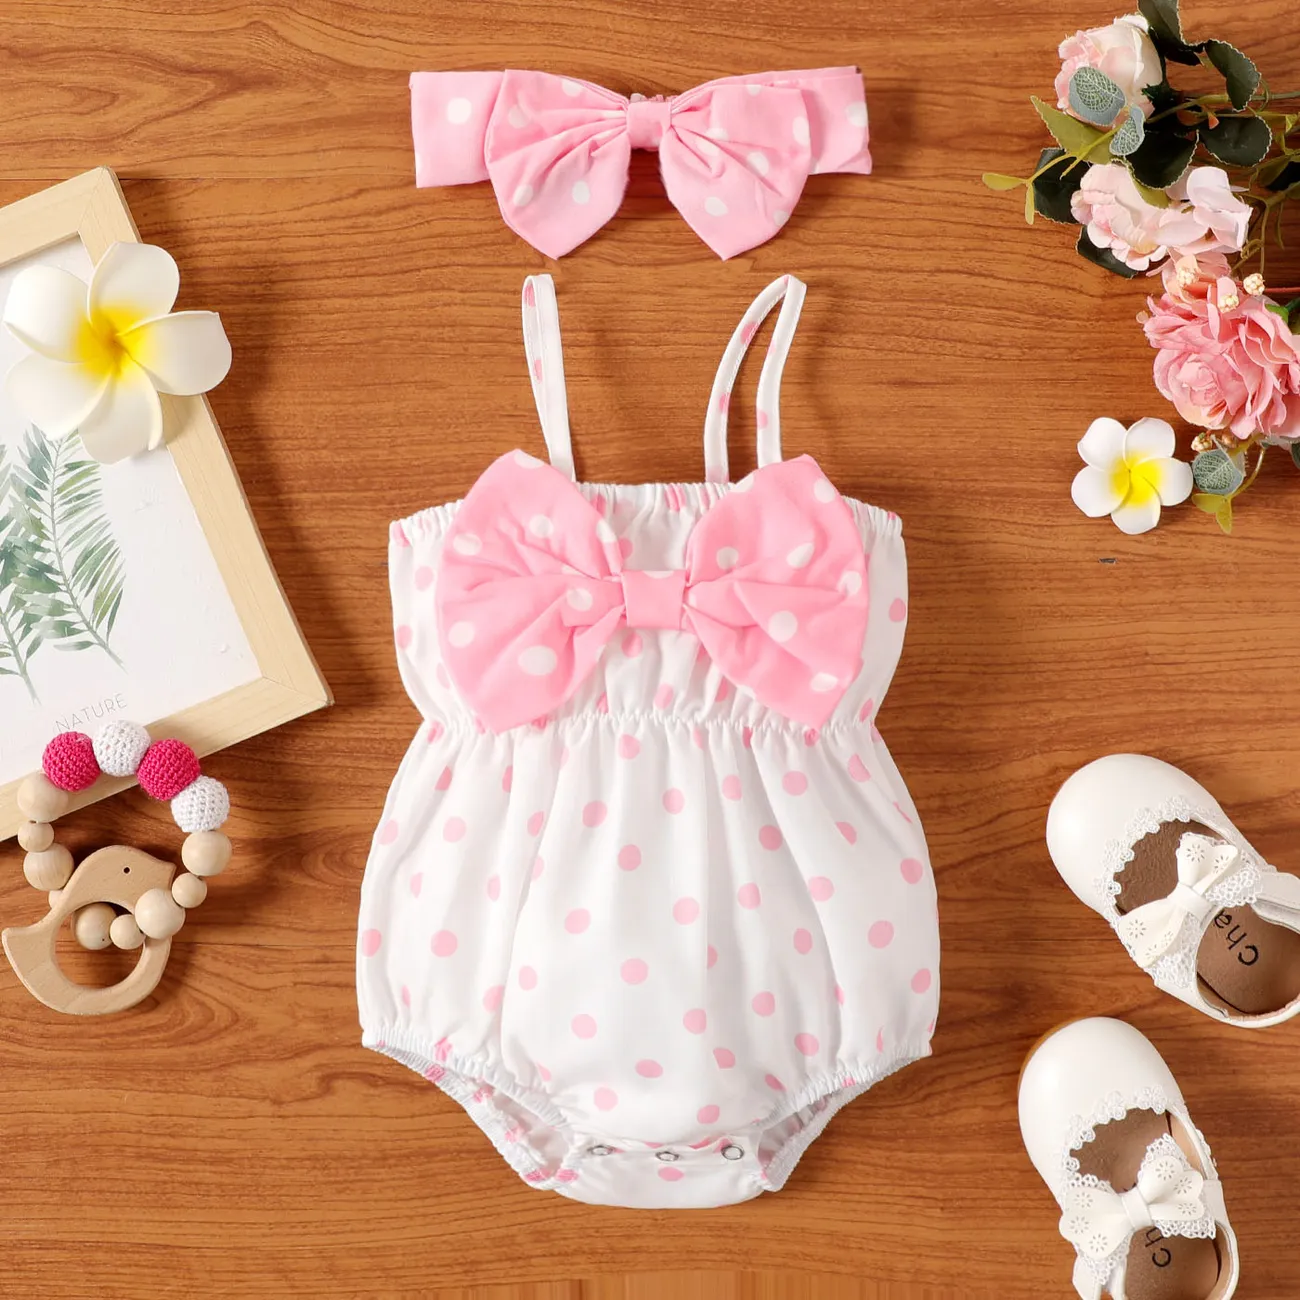 New Baby Girls' Rural Style Cute Printed Pink Bodysuit 2pcs/Set